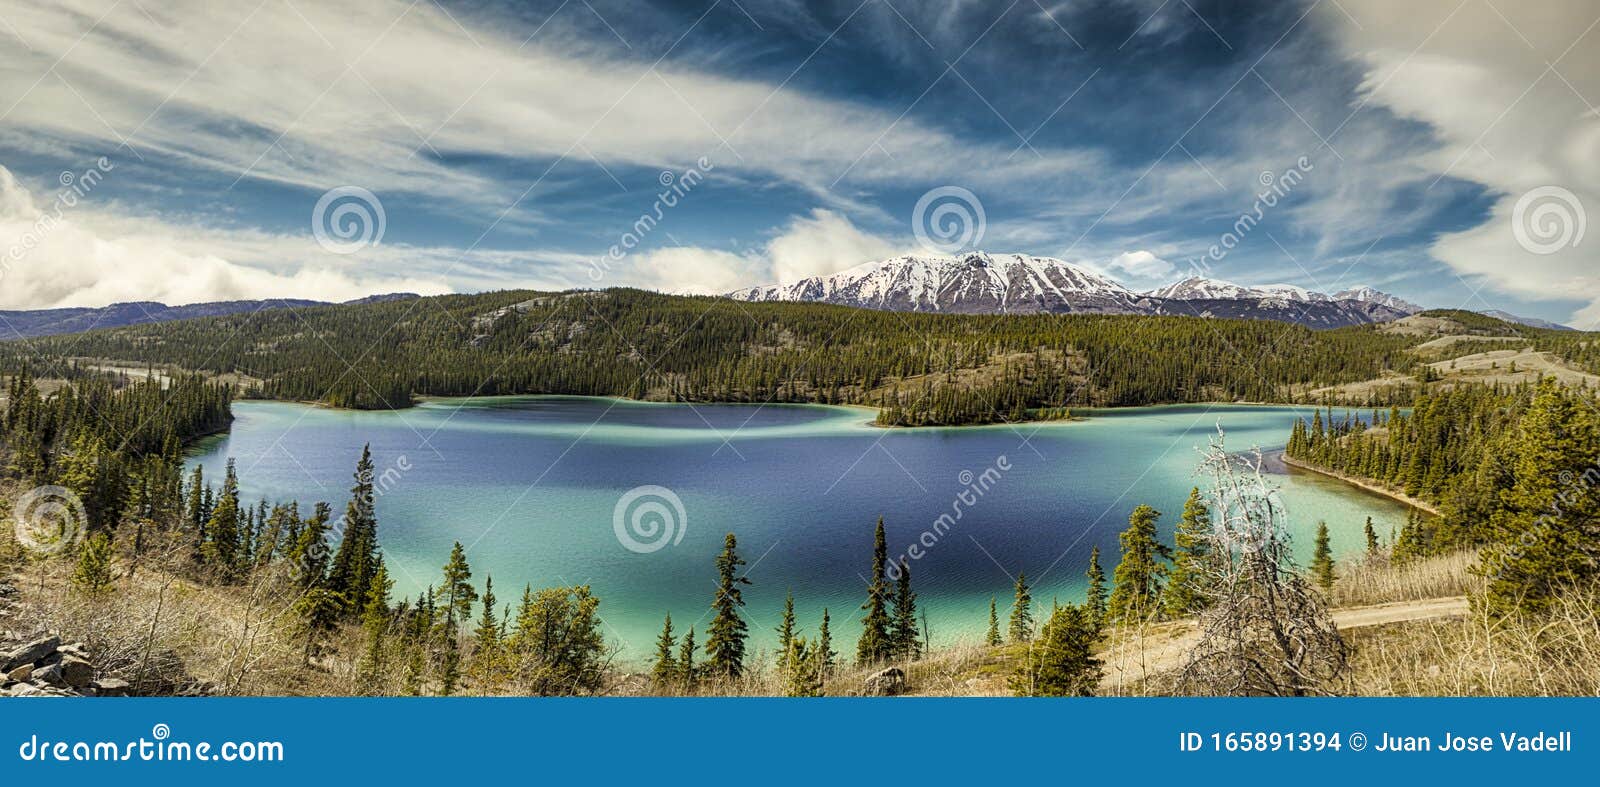 panorama of emerald lake, it is located in the yukon territory of canada